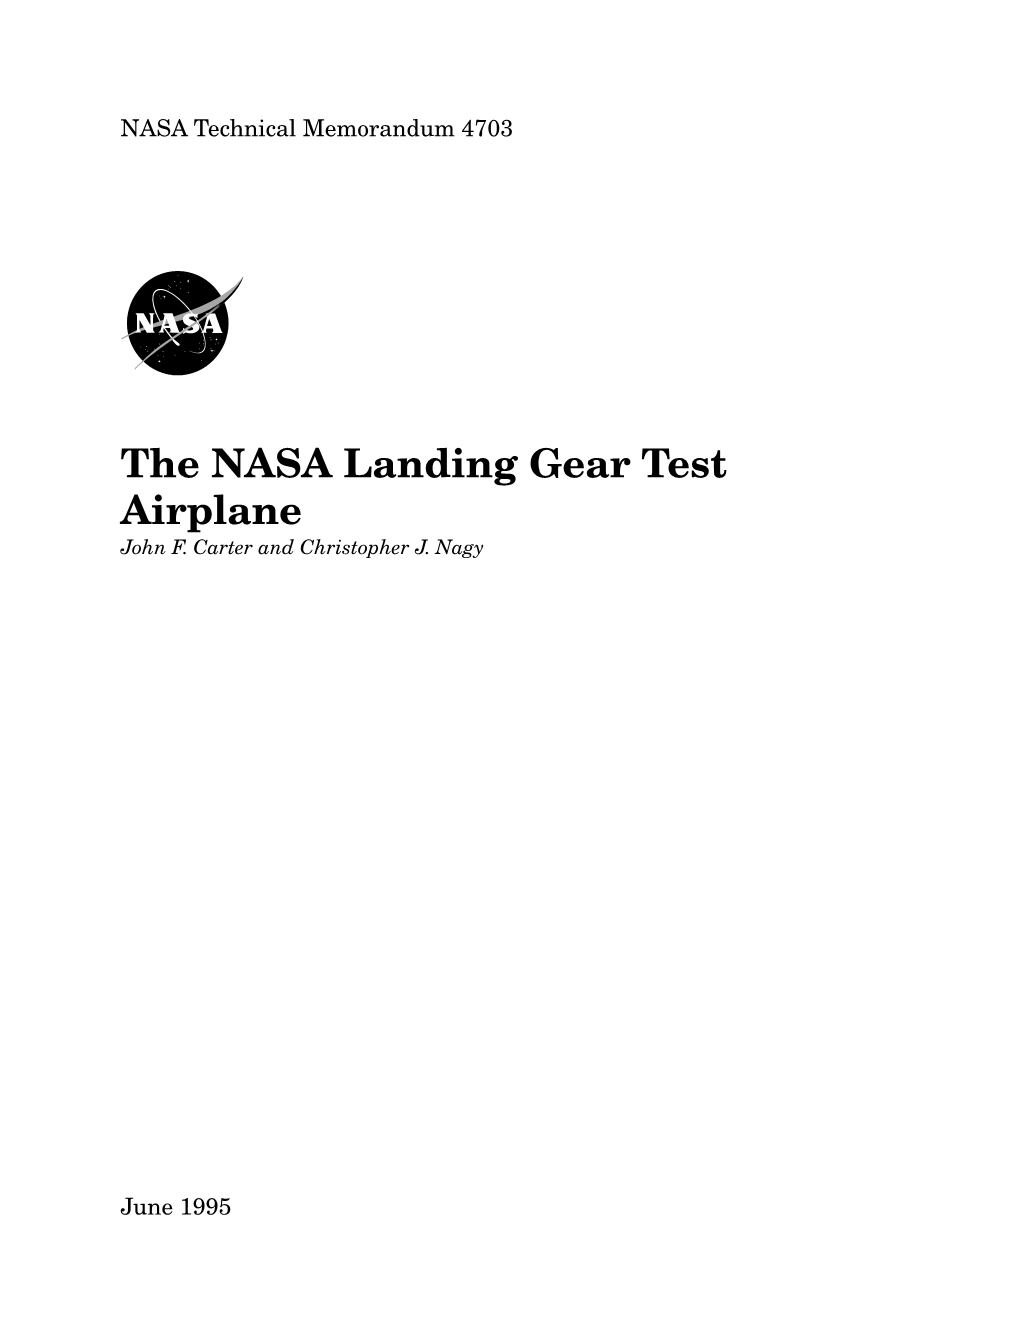 The NASA Landing Gear Test Airplane John F